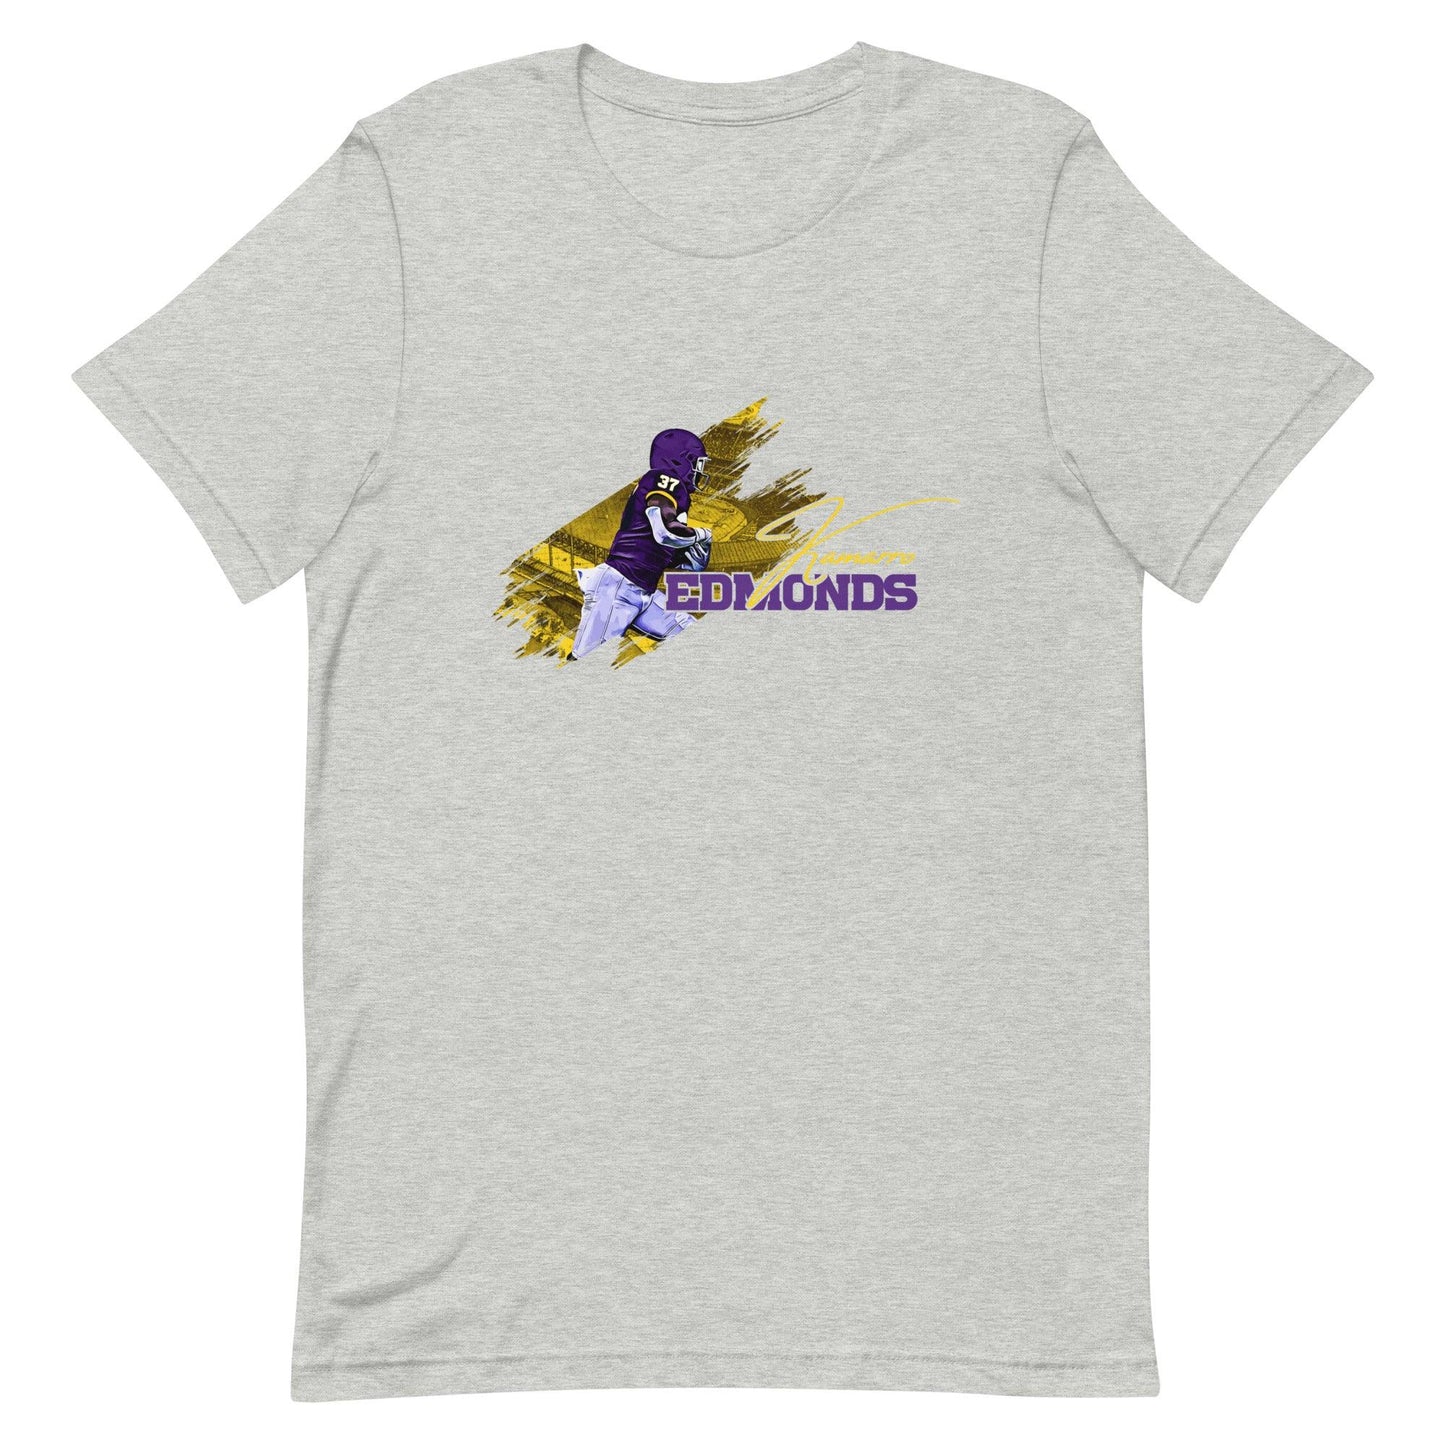 Kamarro Edmonds "Gameday" t-shirt - Fan Arch